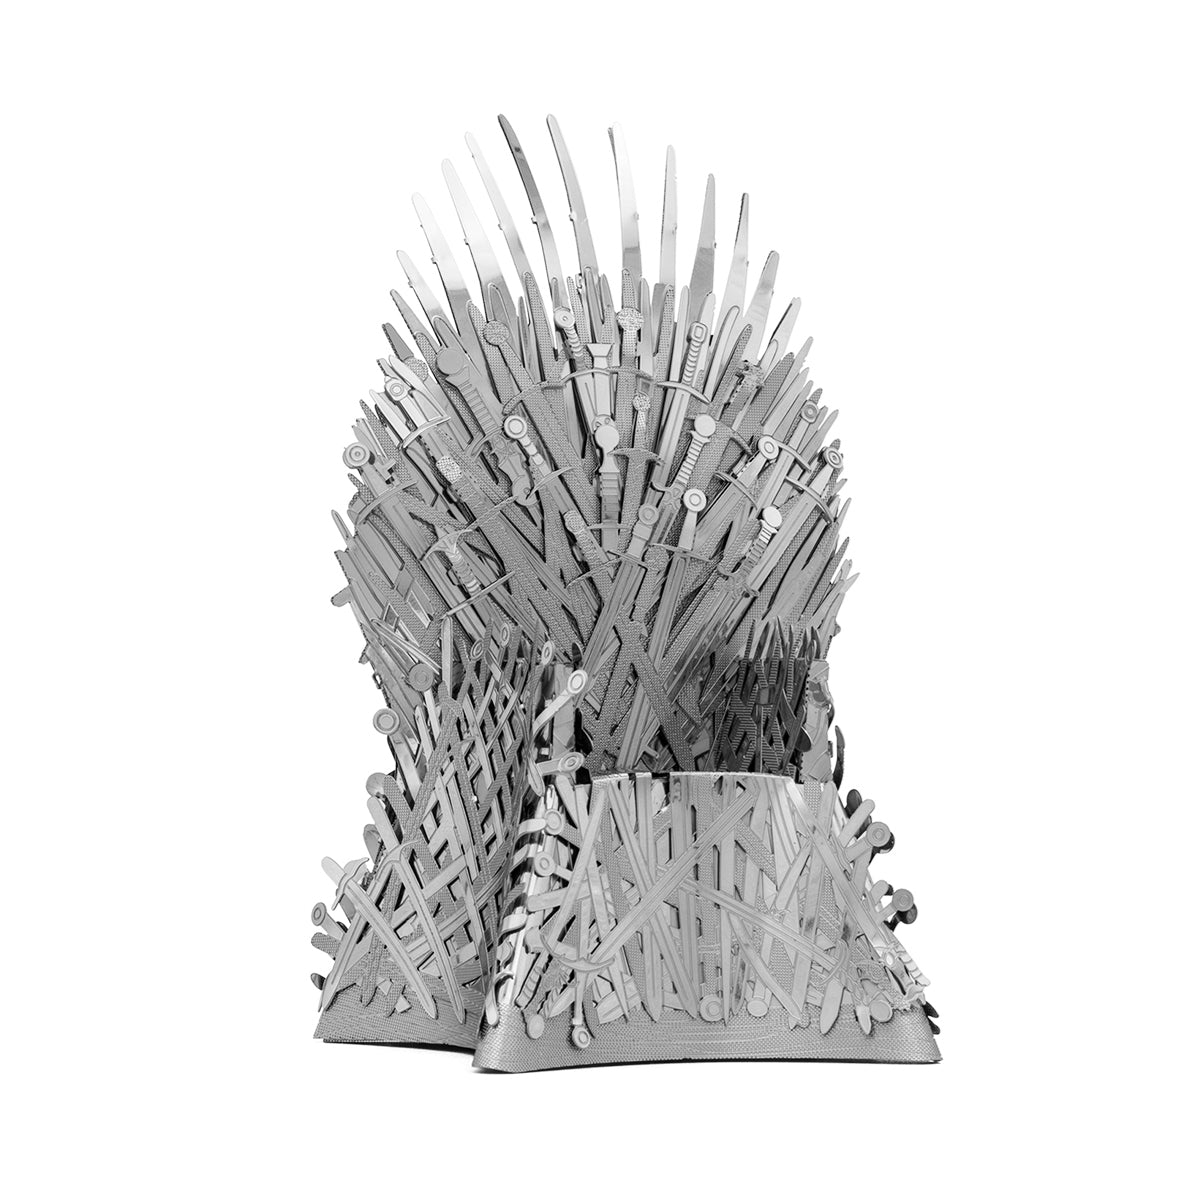 Metal Earth - Premium Series - Game of Thrones: Iron Throne Model Kit